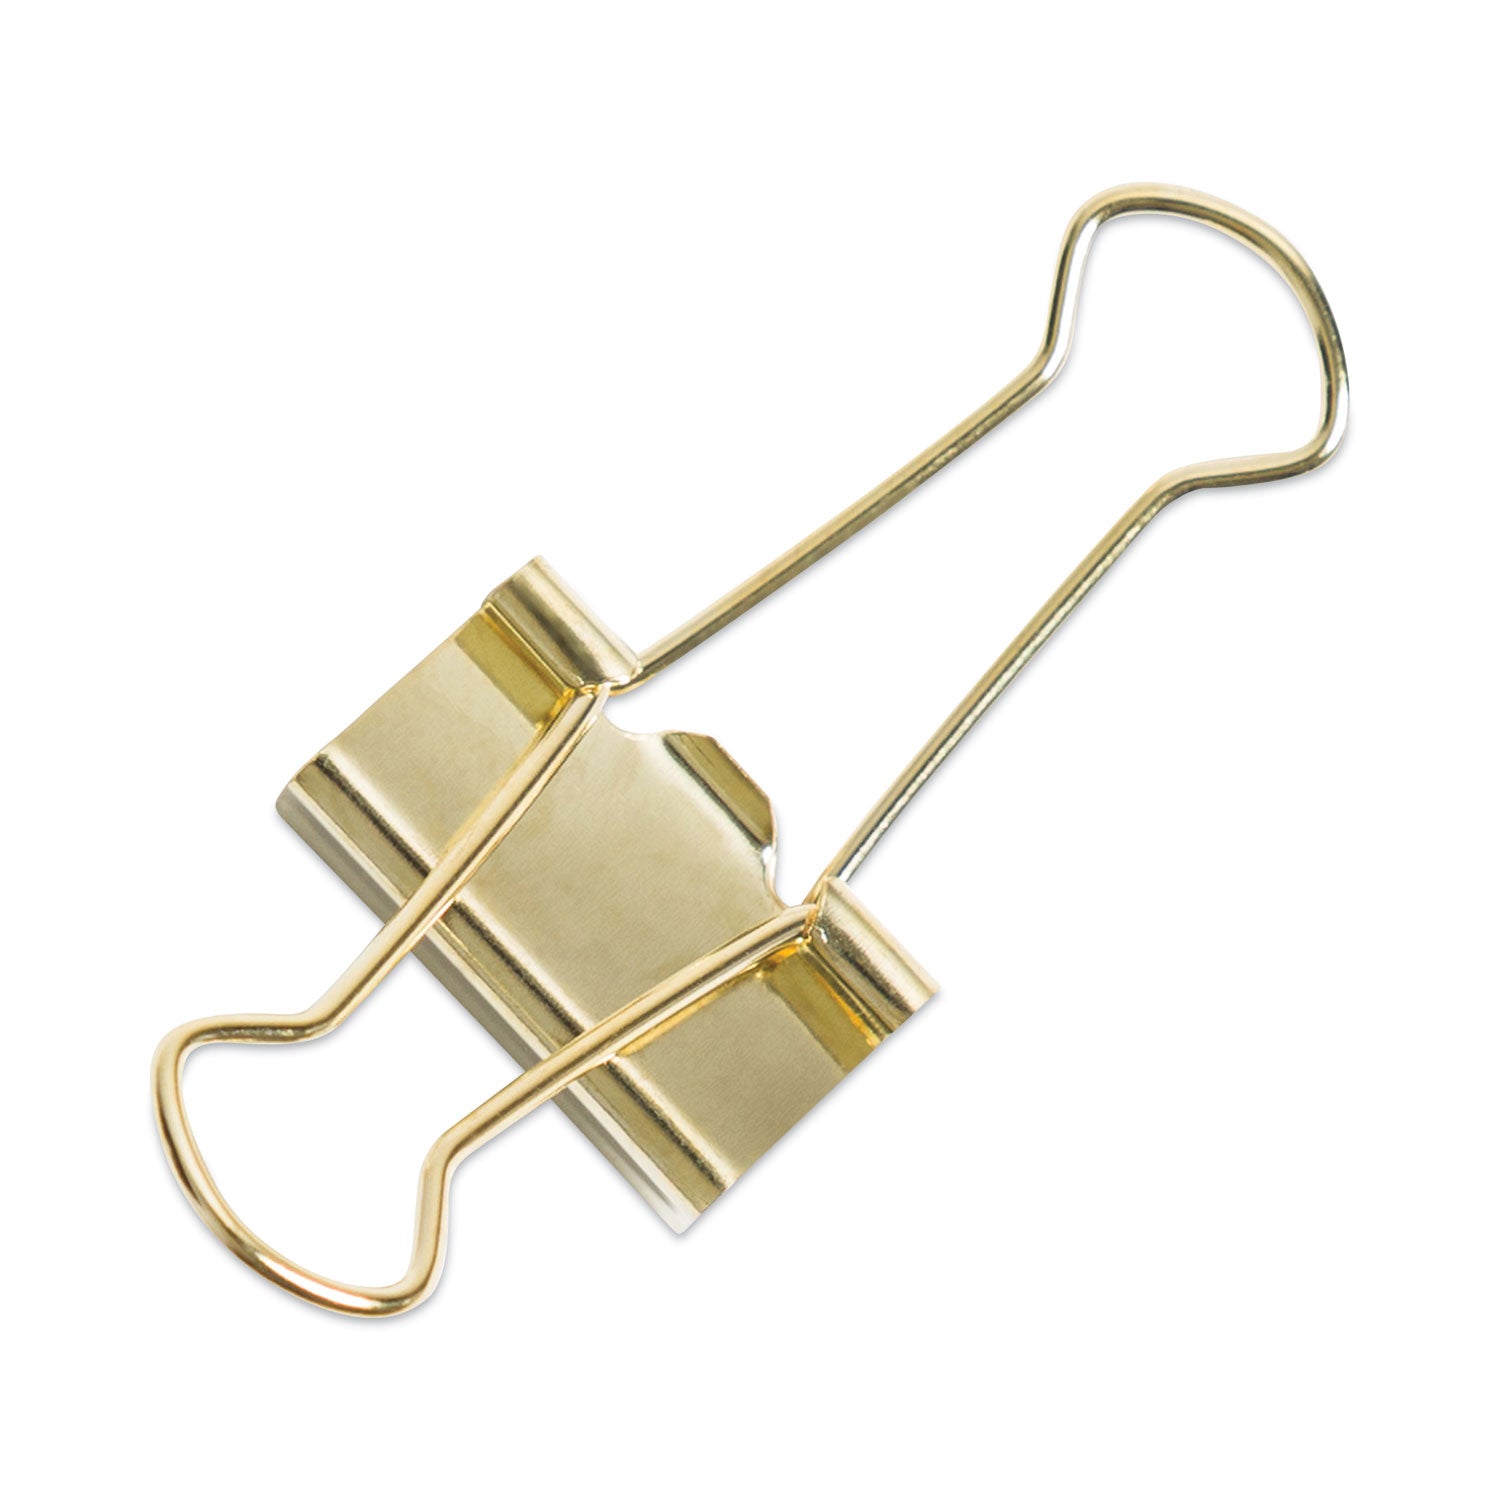 binder-clips-small-gold-72-pack_ubr3595u0624 - 1